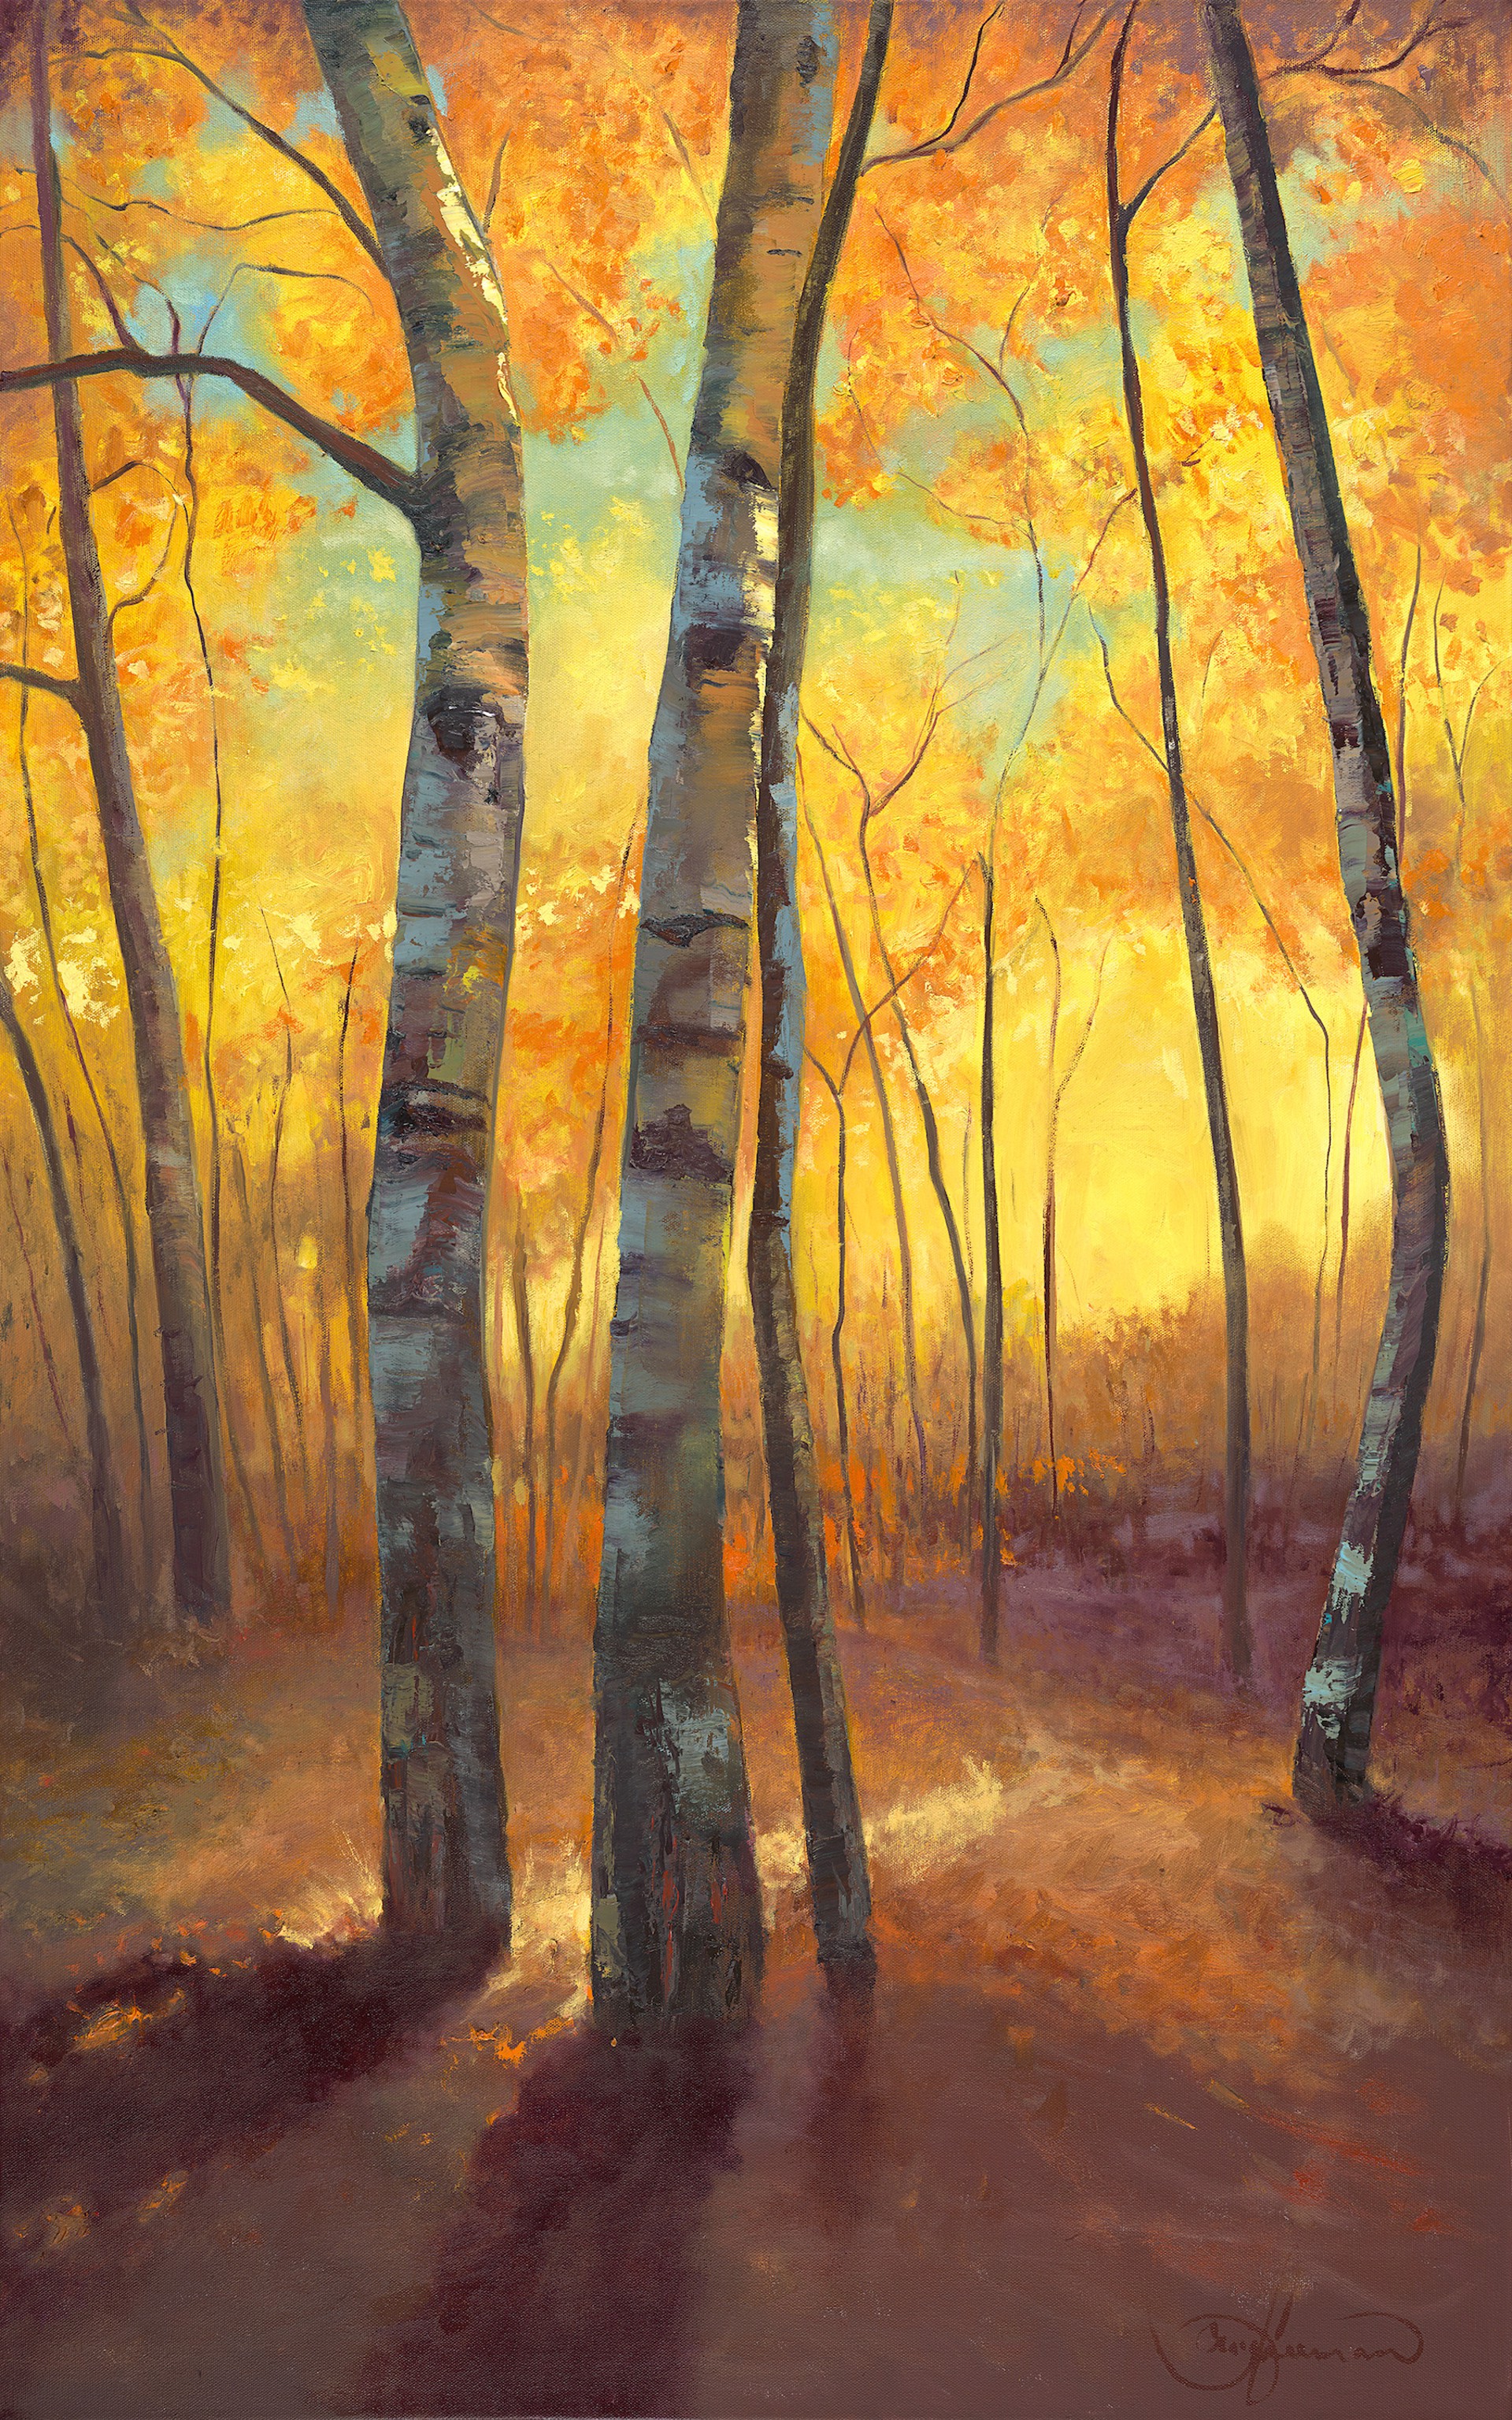 Autumn Glory by Craig Freeman